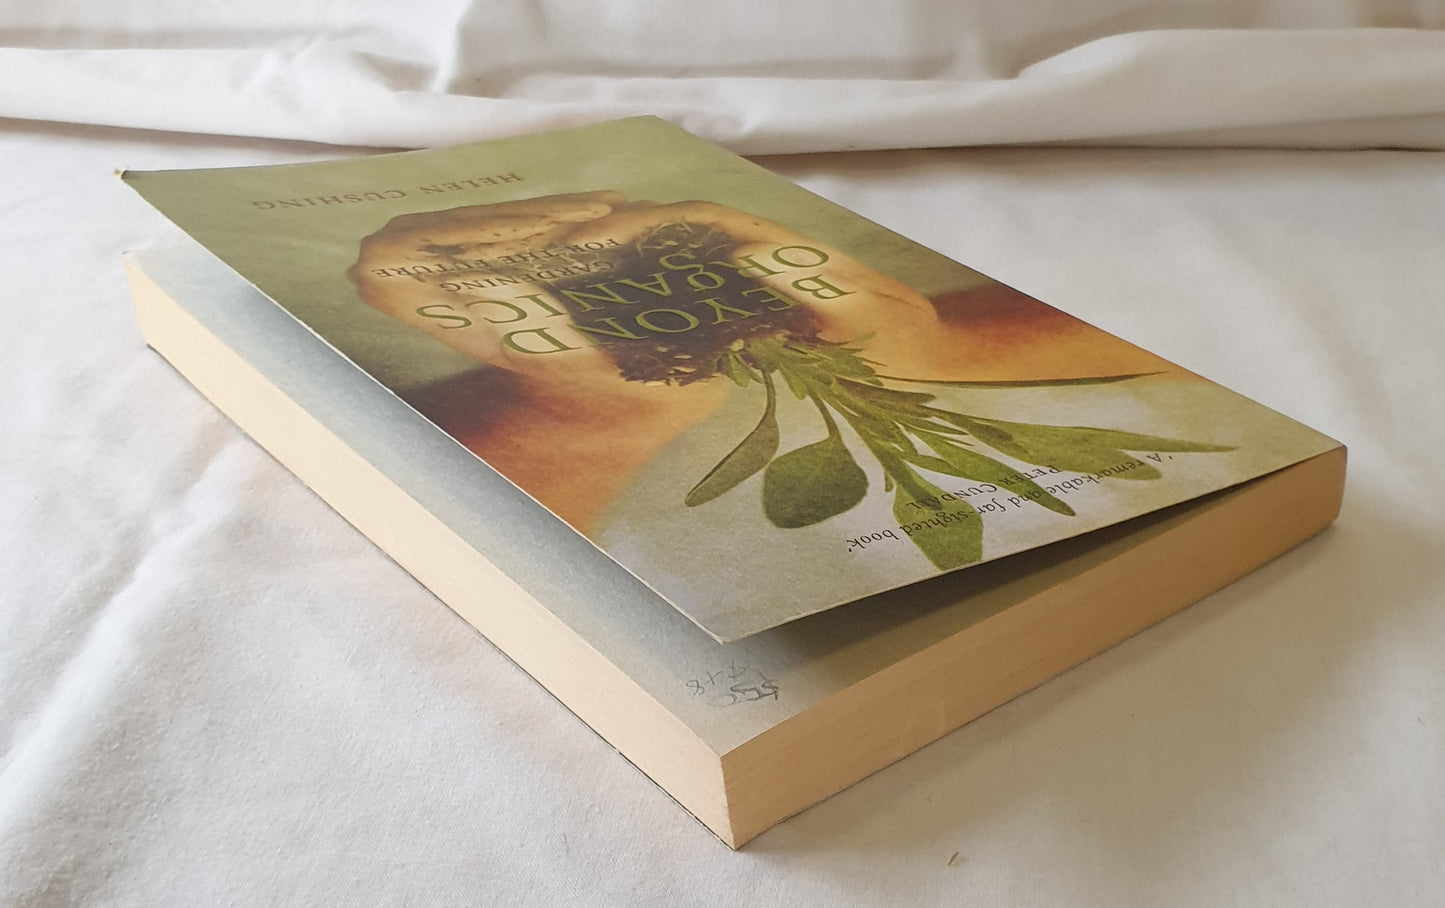 Beyond Organics by Helen Cushing